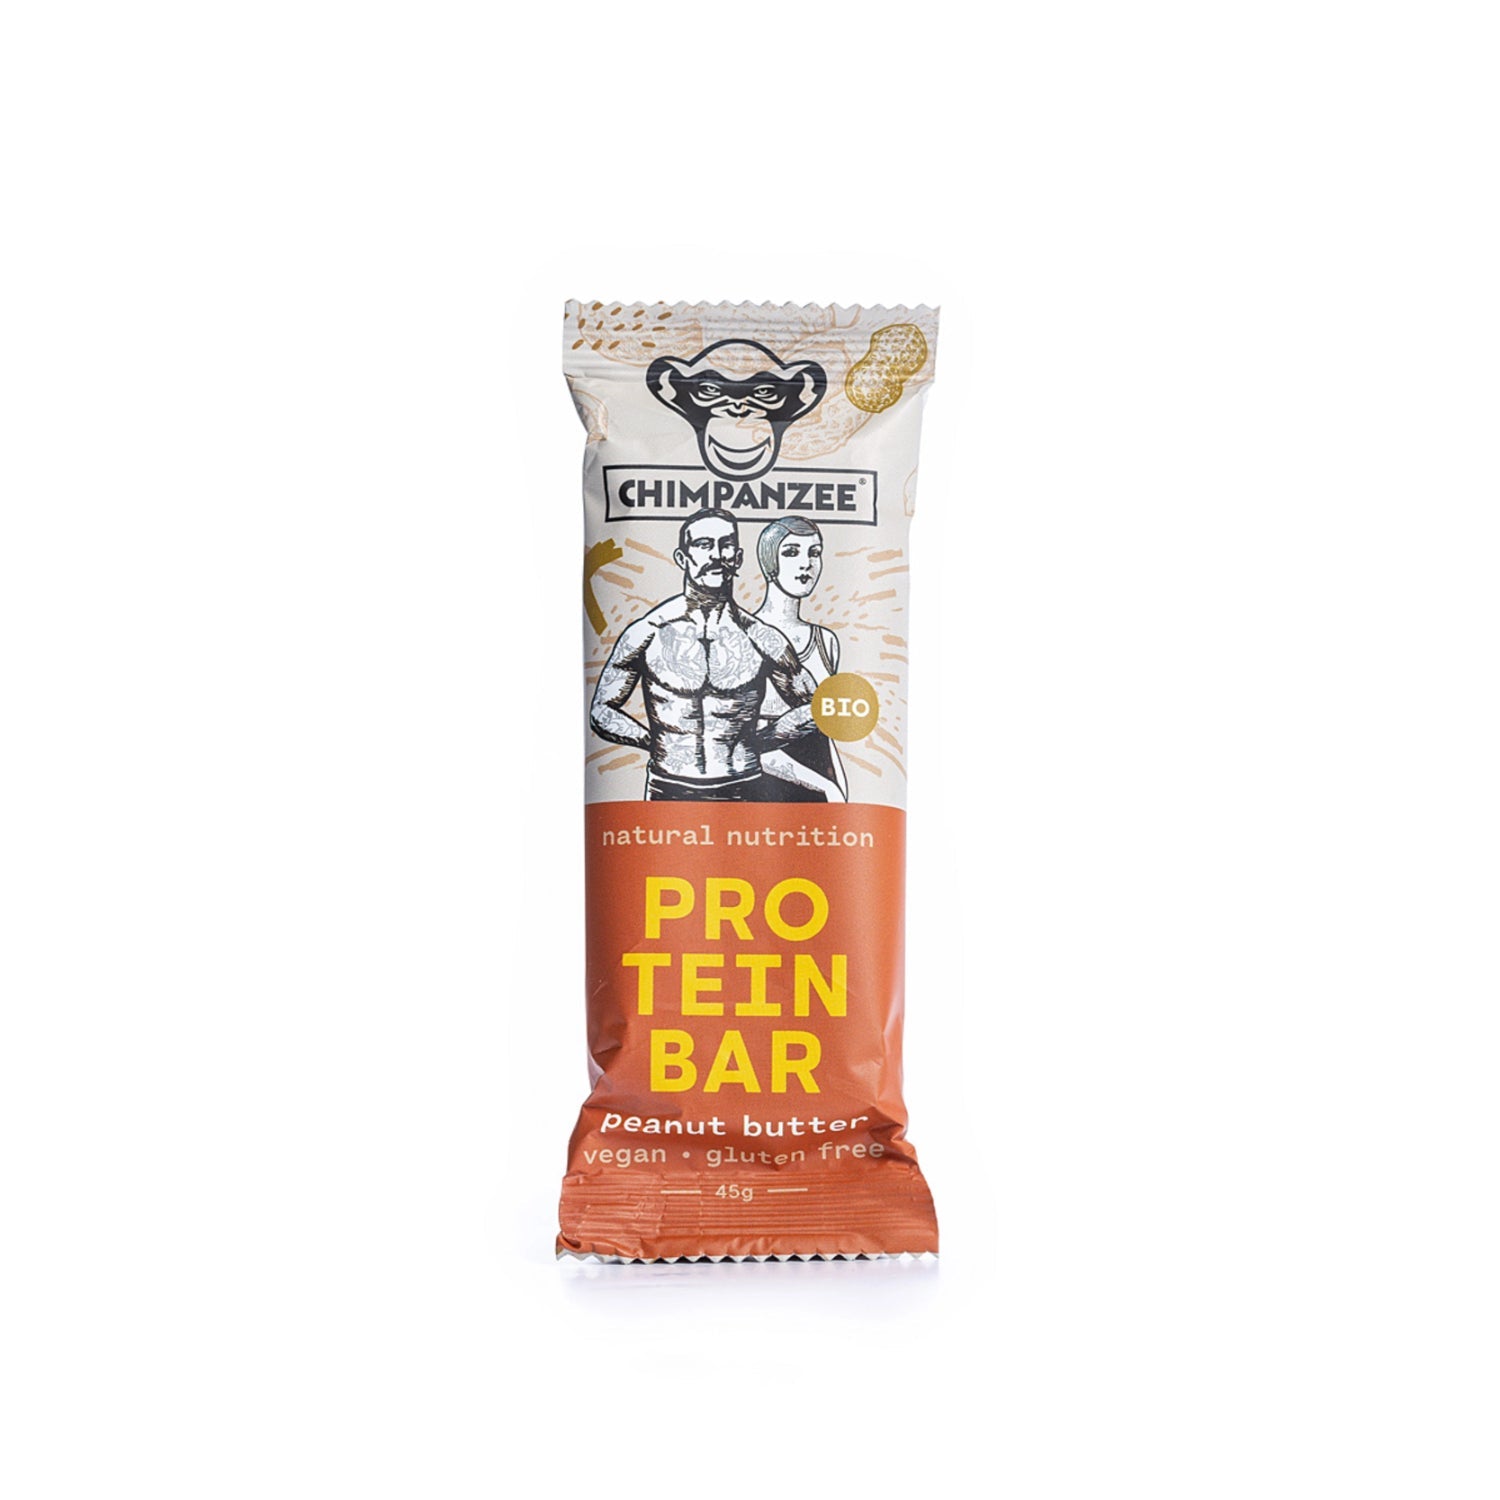 Chimpanzee BIO Protein Bar - Peanut Butter 3-Pack